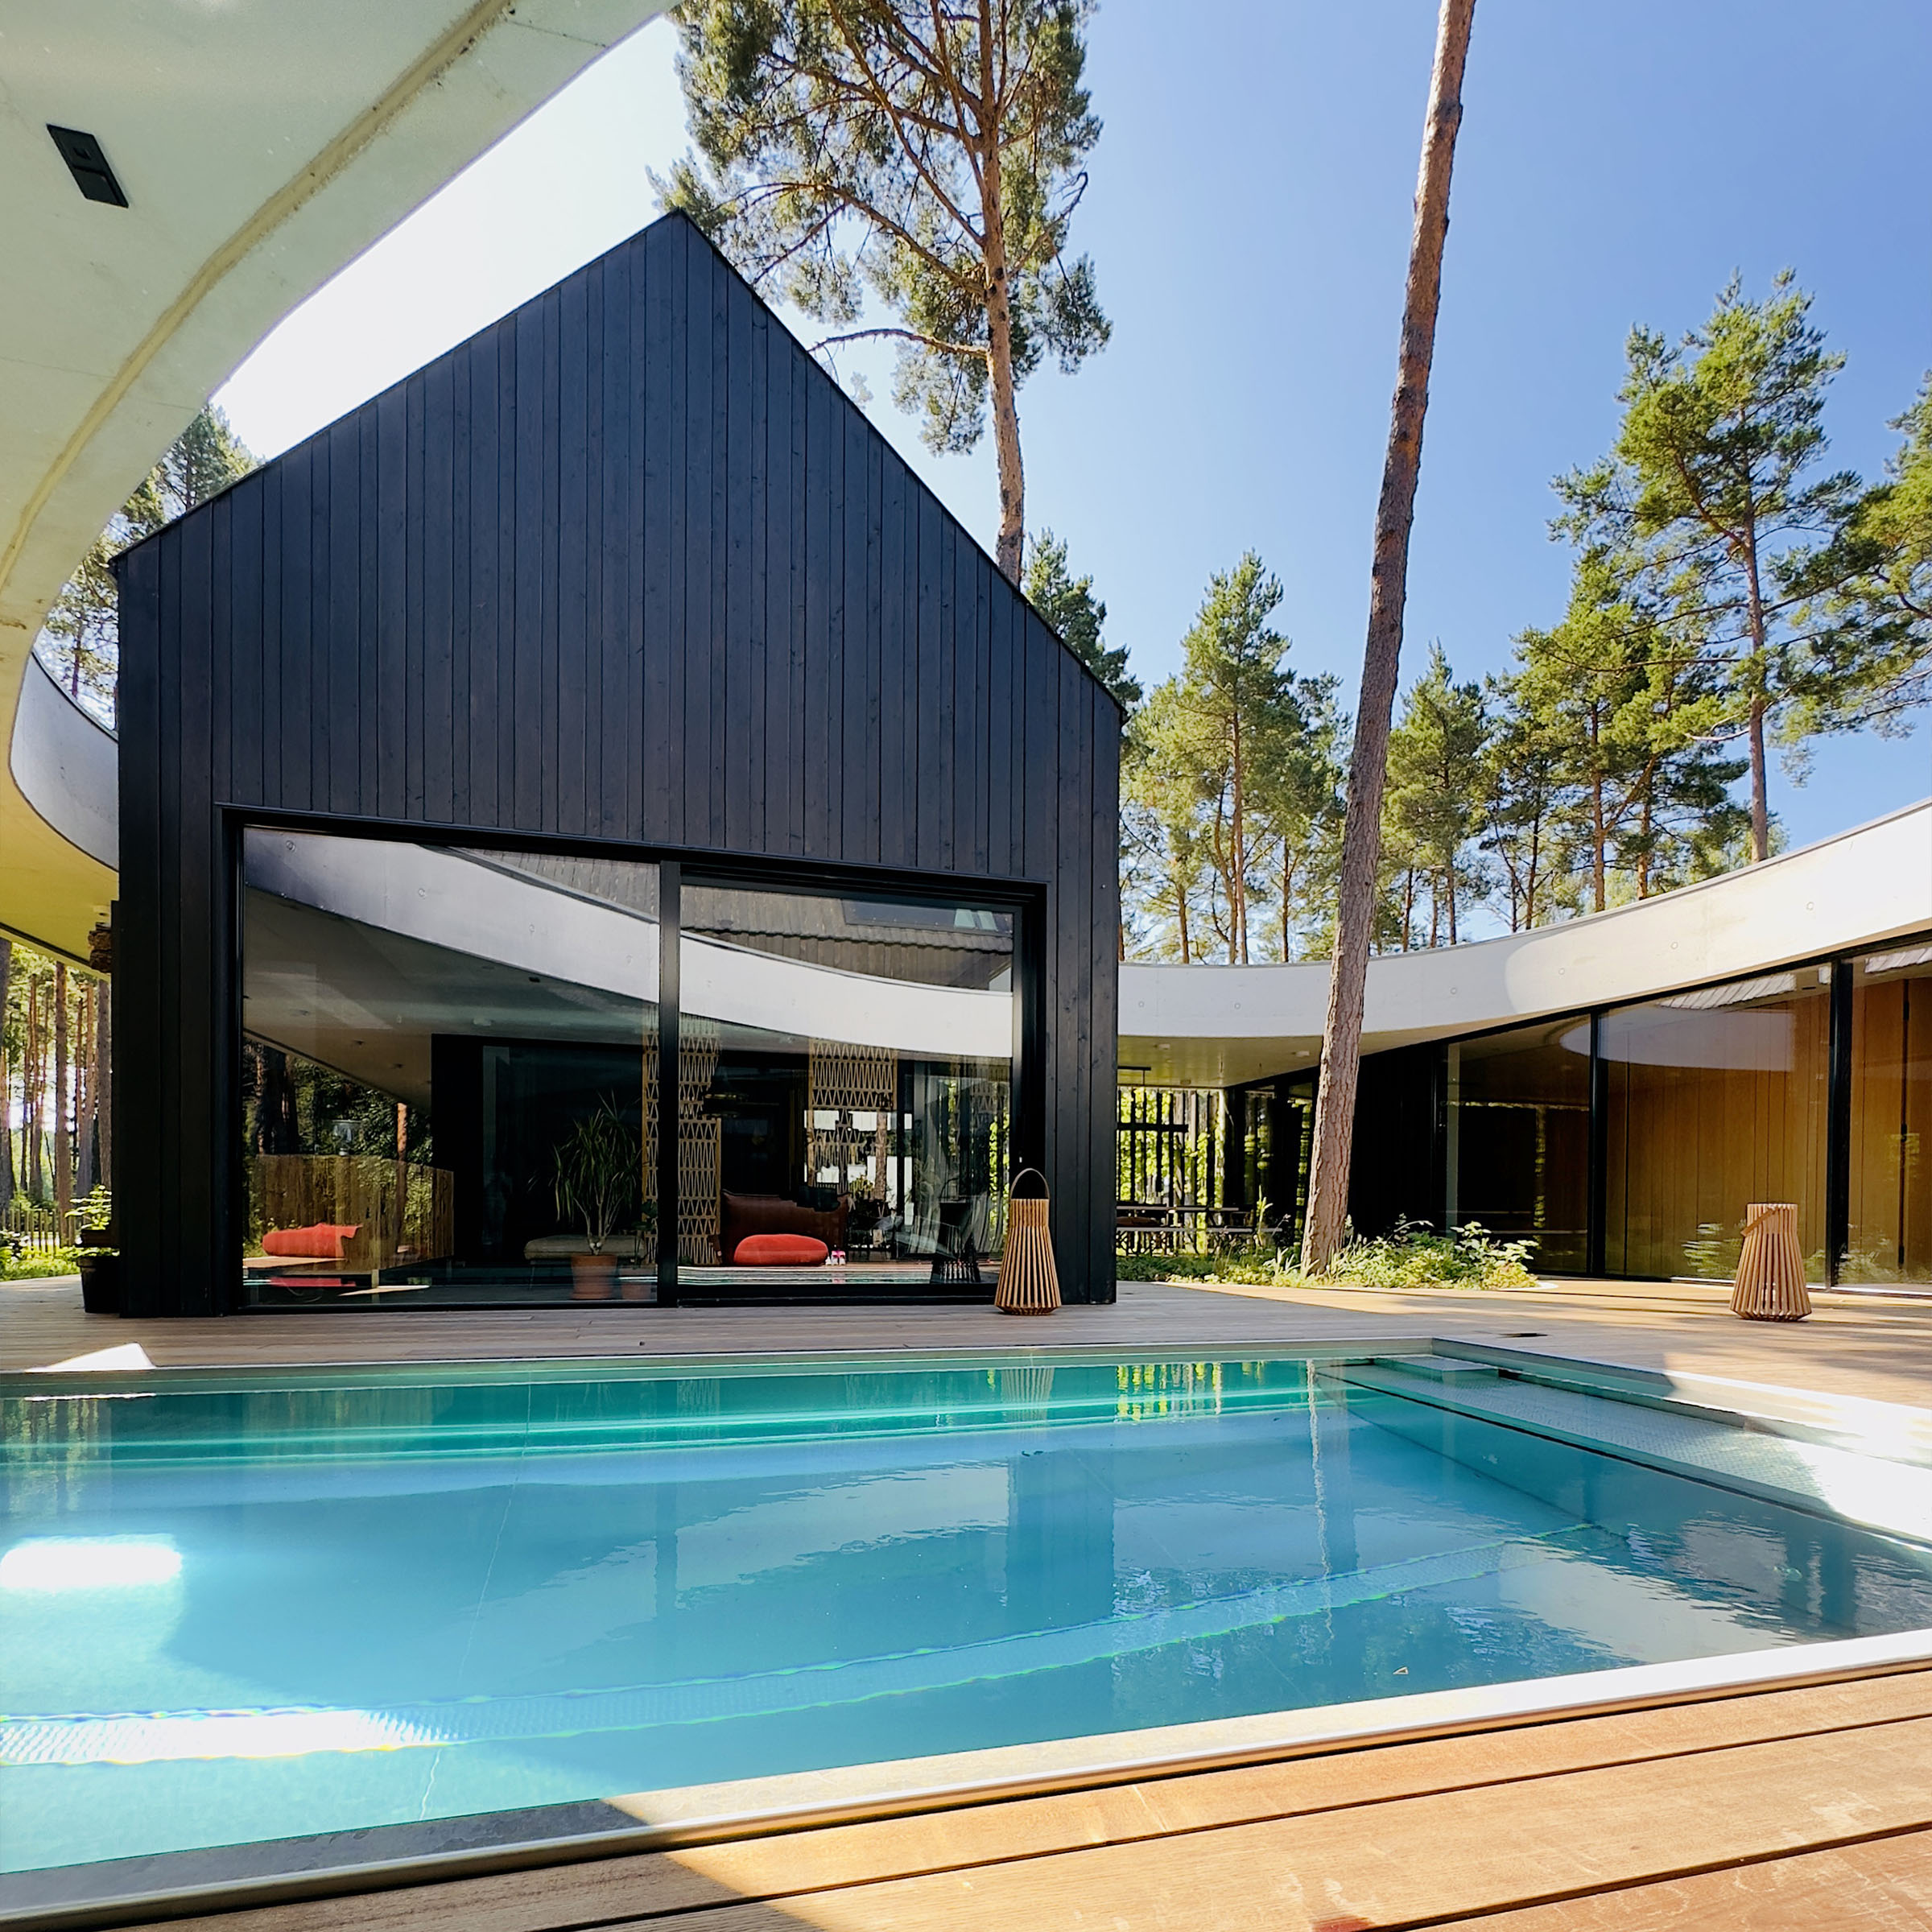 A064_house_estonia_tallinn_viimsi_concrete_villa_forest_wood_-8